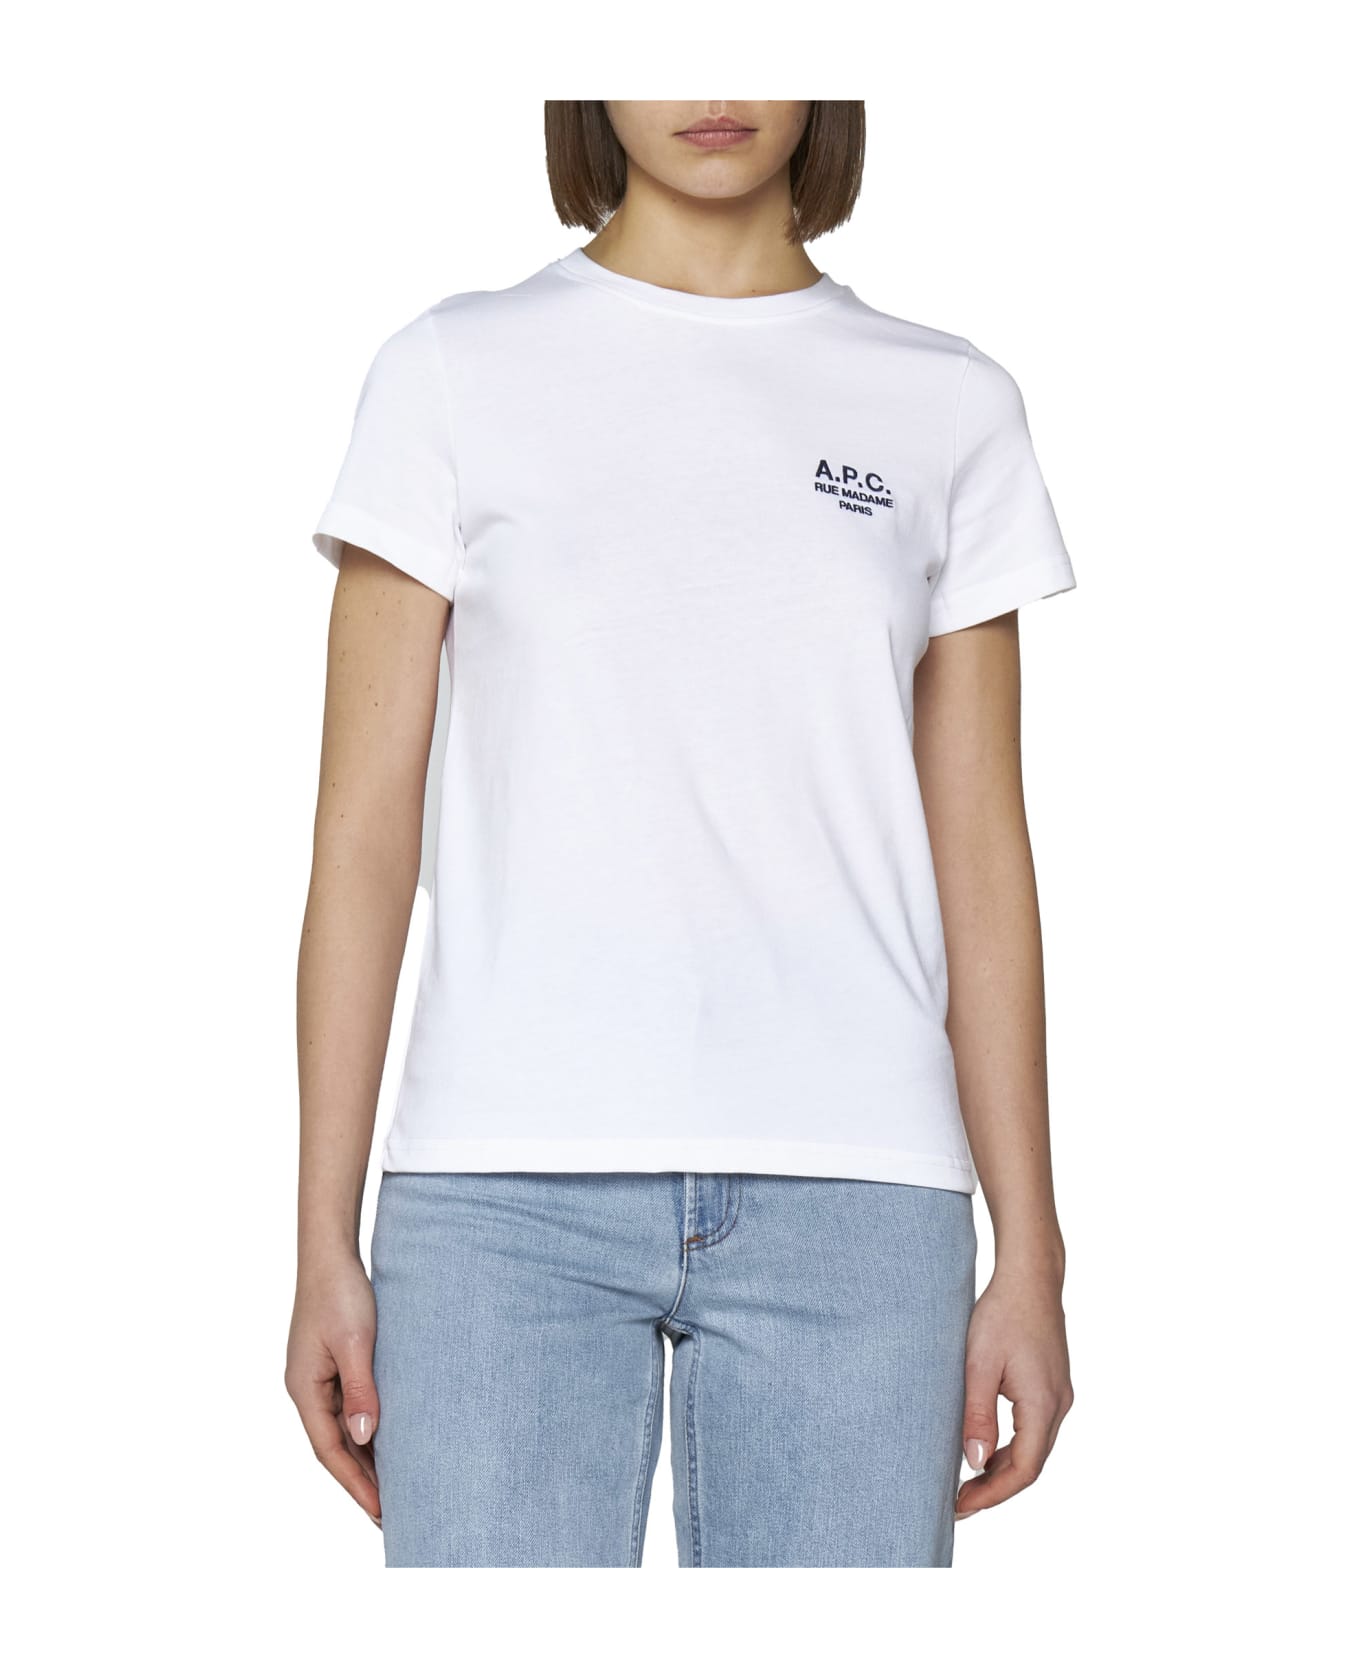 A.P.C. Denise T-shirt - White